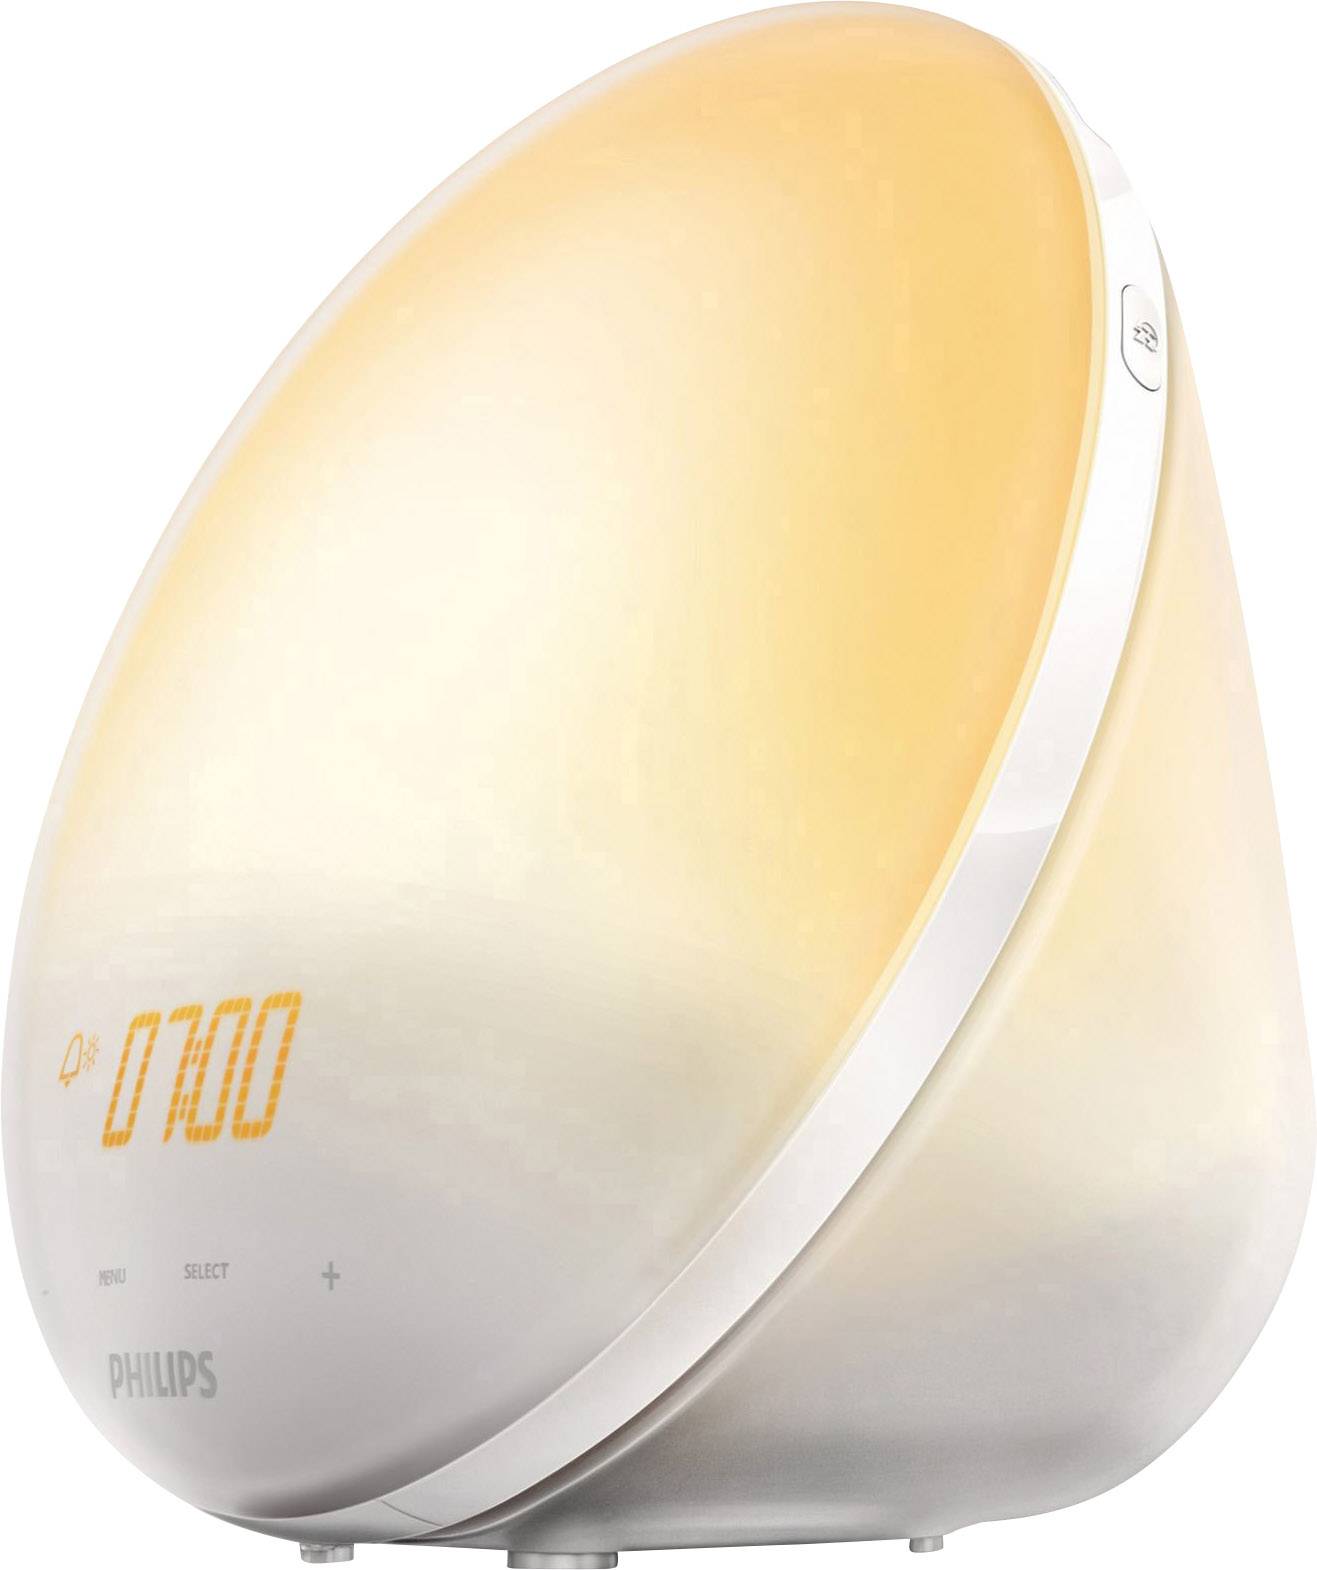 Afslut Kvittering Adskille Philips HF3510/01 Wake-up light/dawn simulator 16.5 W White | Conrad.com